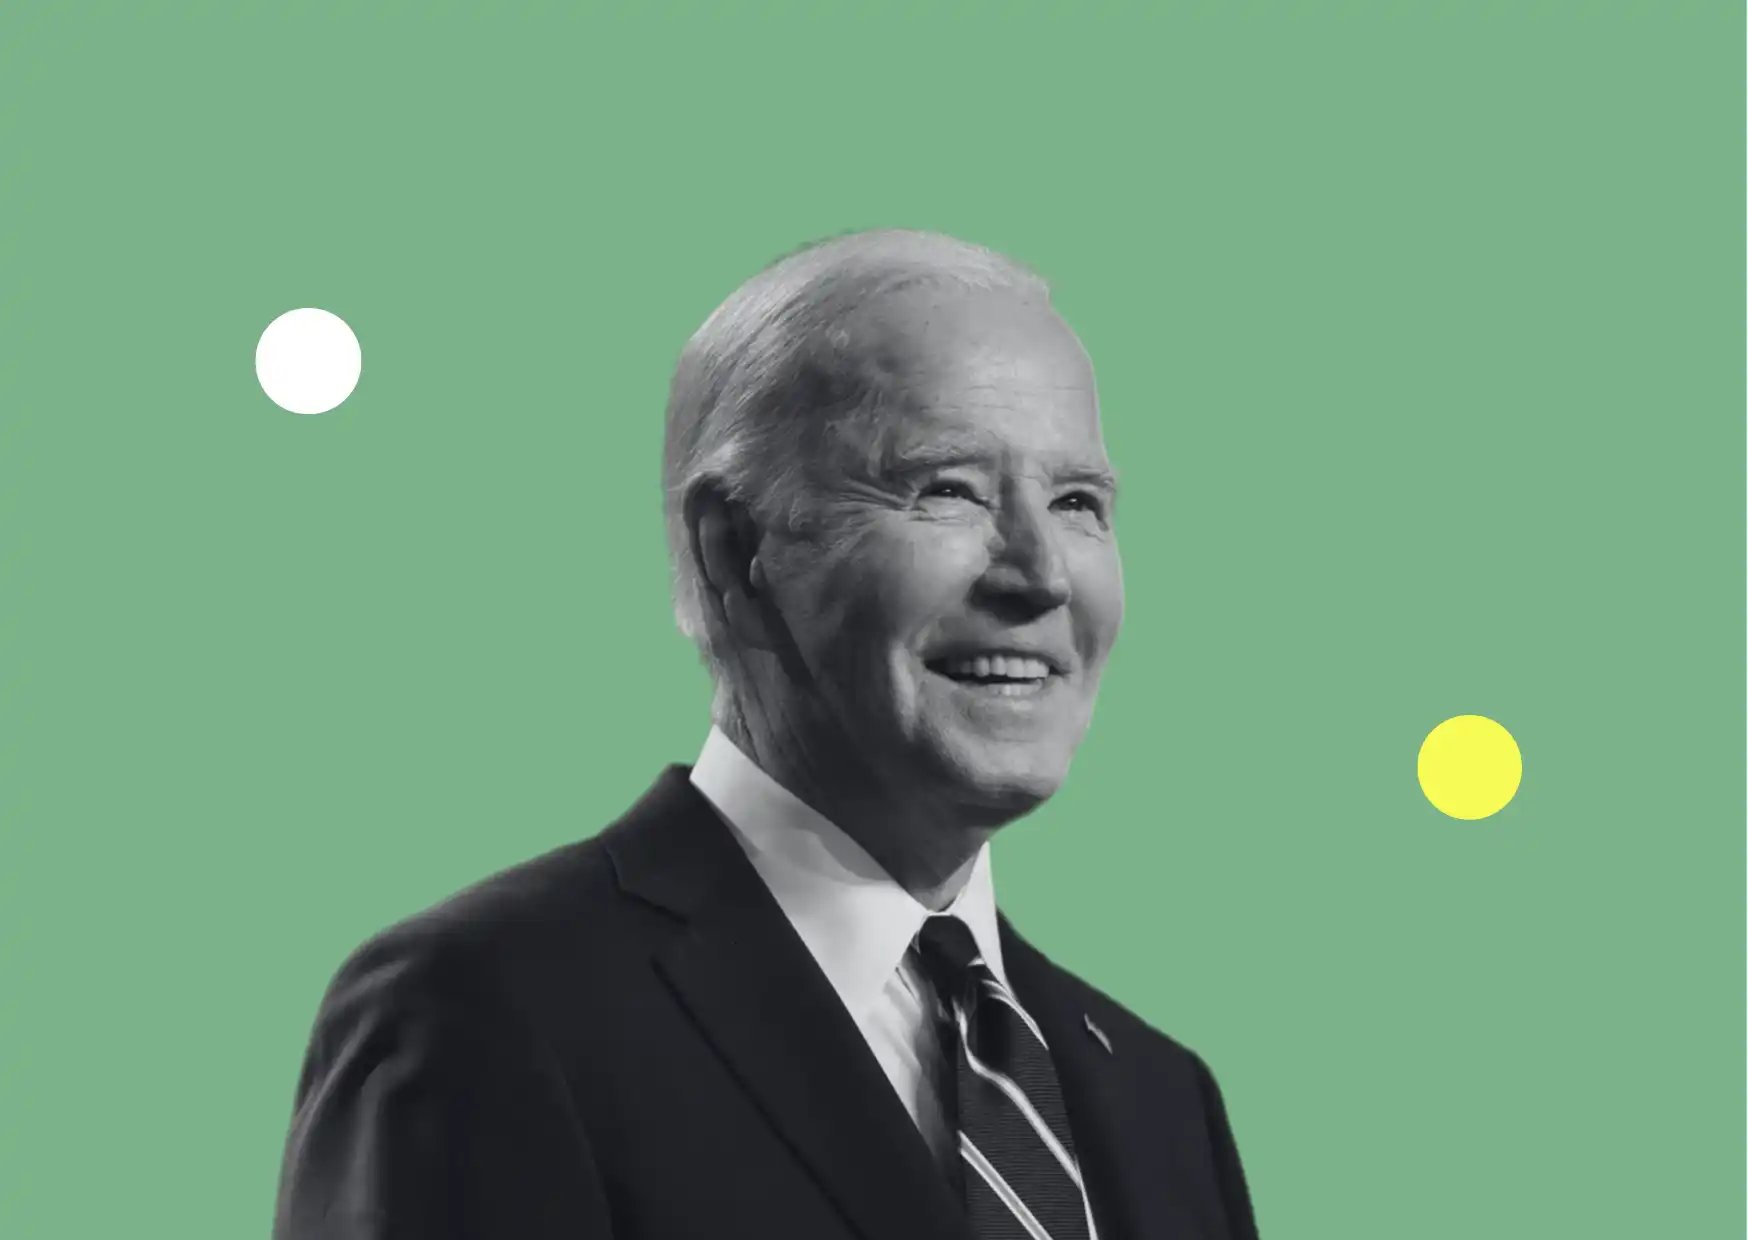 Joe Biden's Education and Career Journey